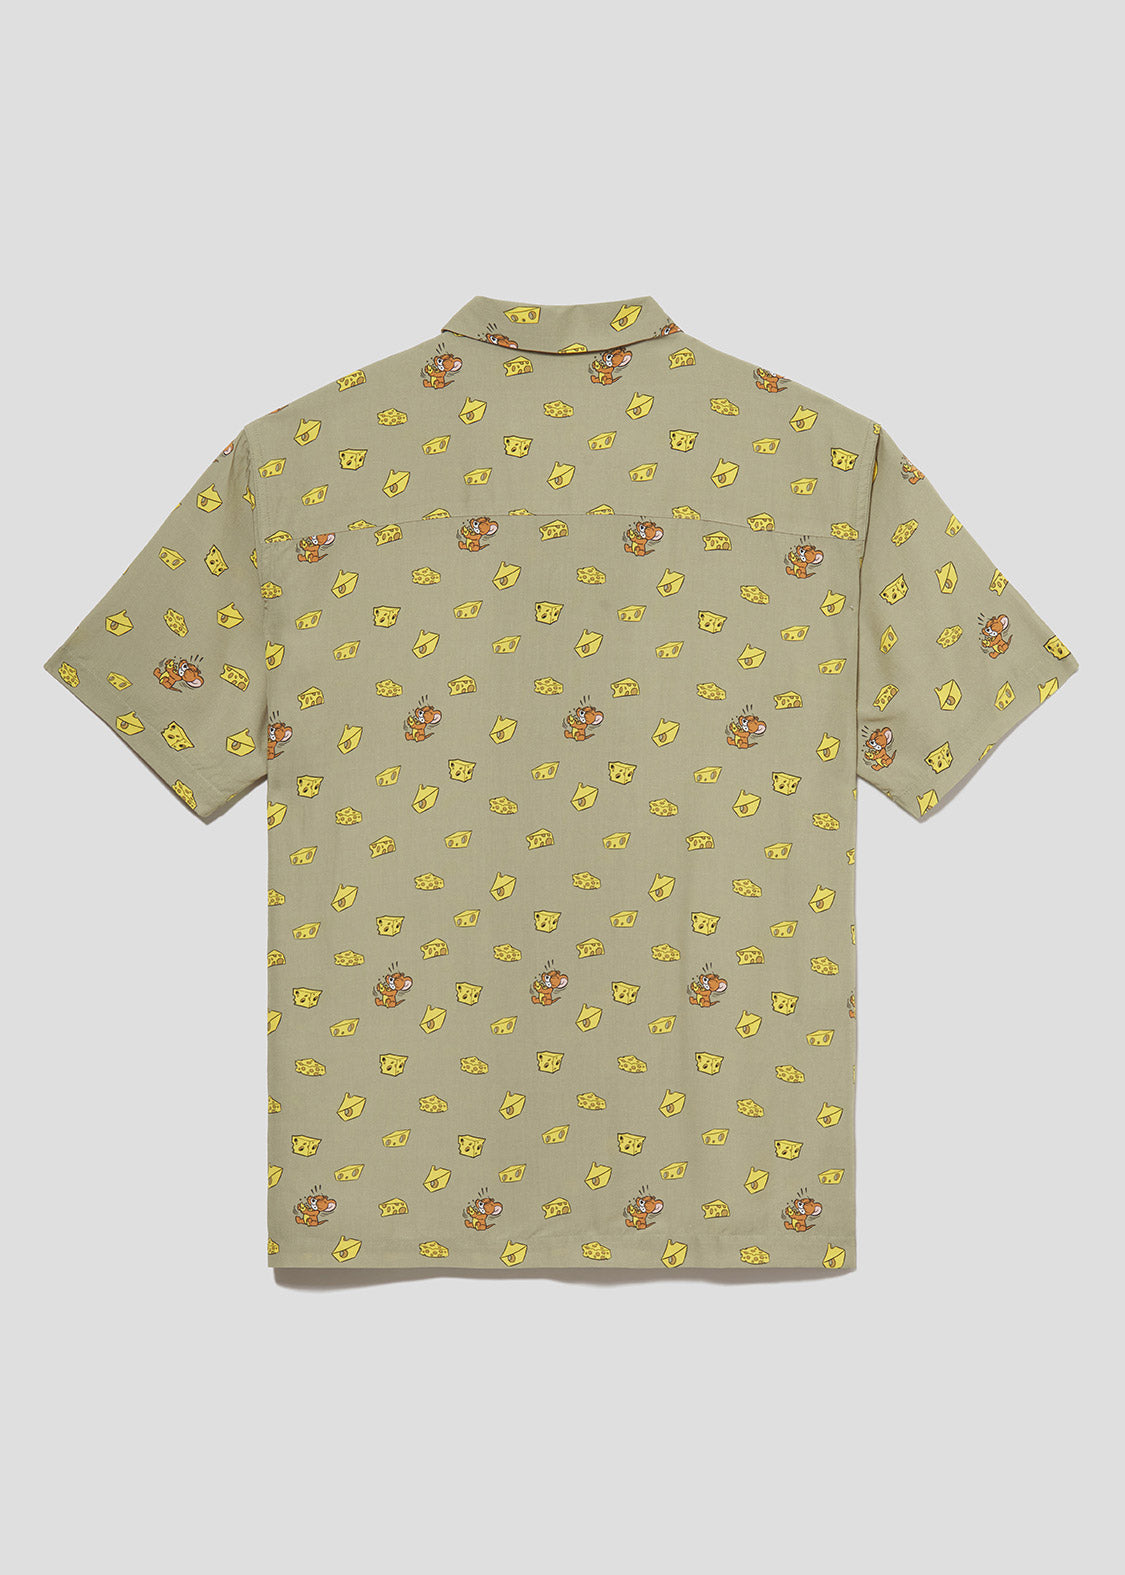 Tom and Jerry Open Collar Short Sleeve Shirt (Tom and Jerry_Cheese and Jerry Pattern)